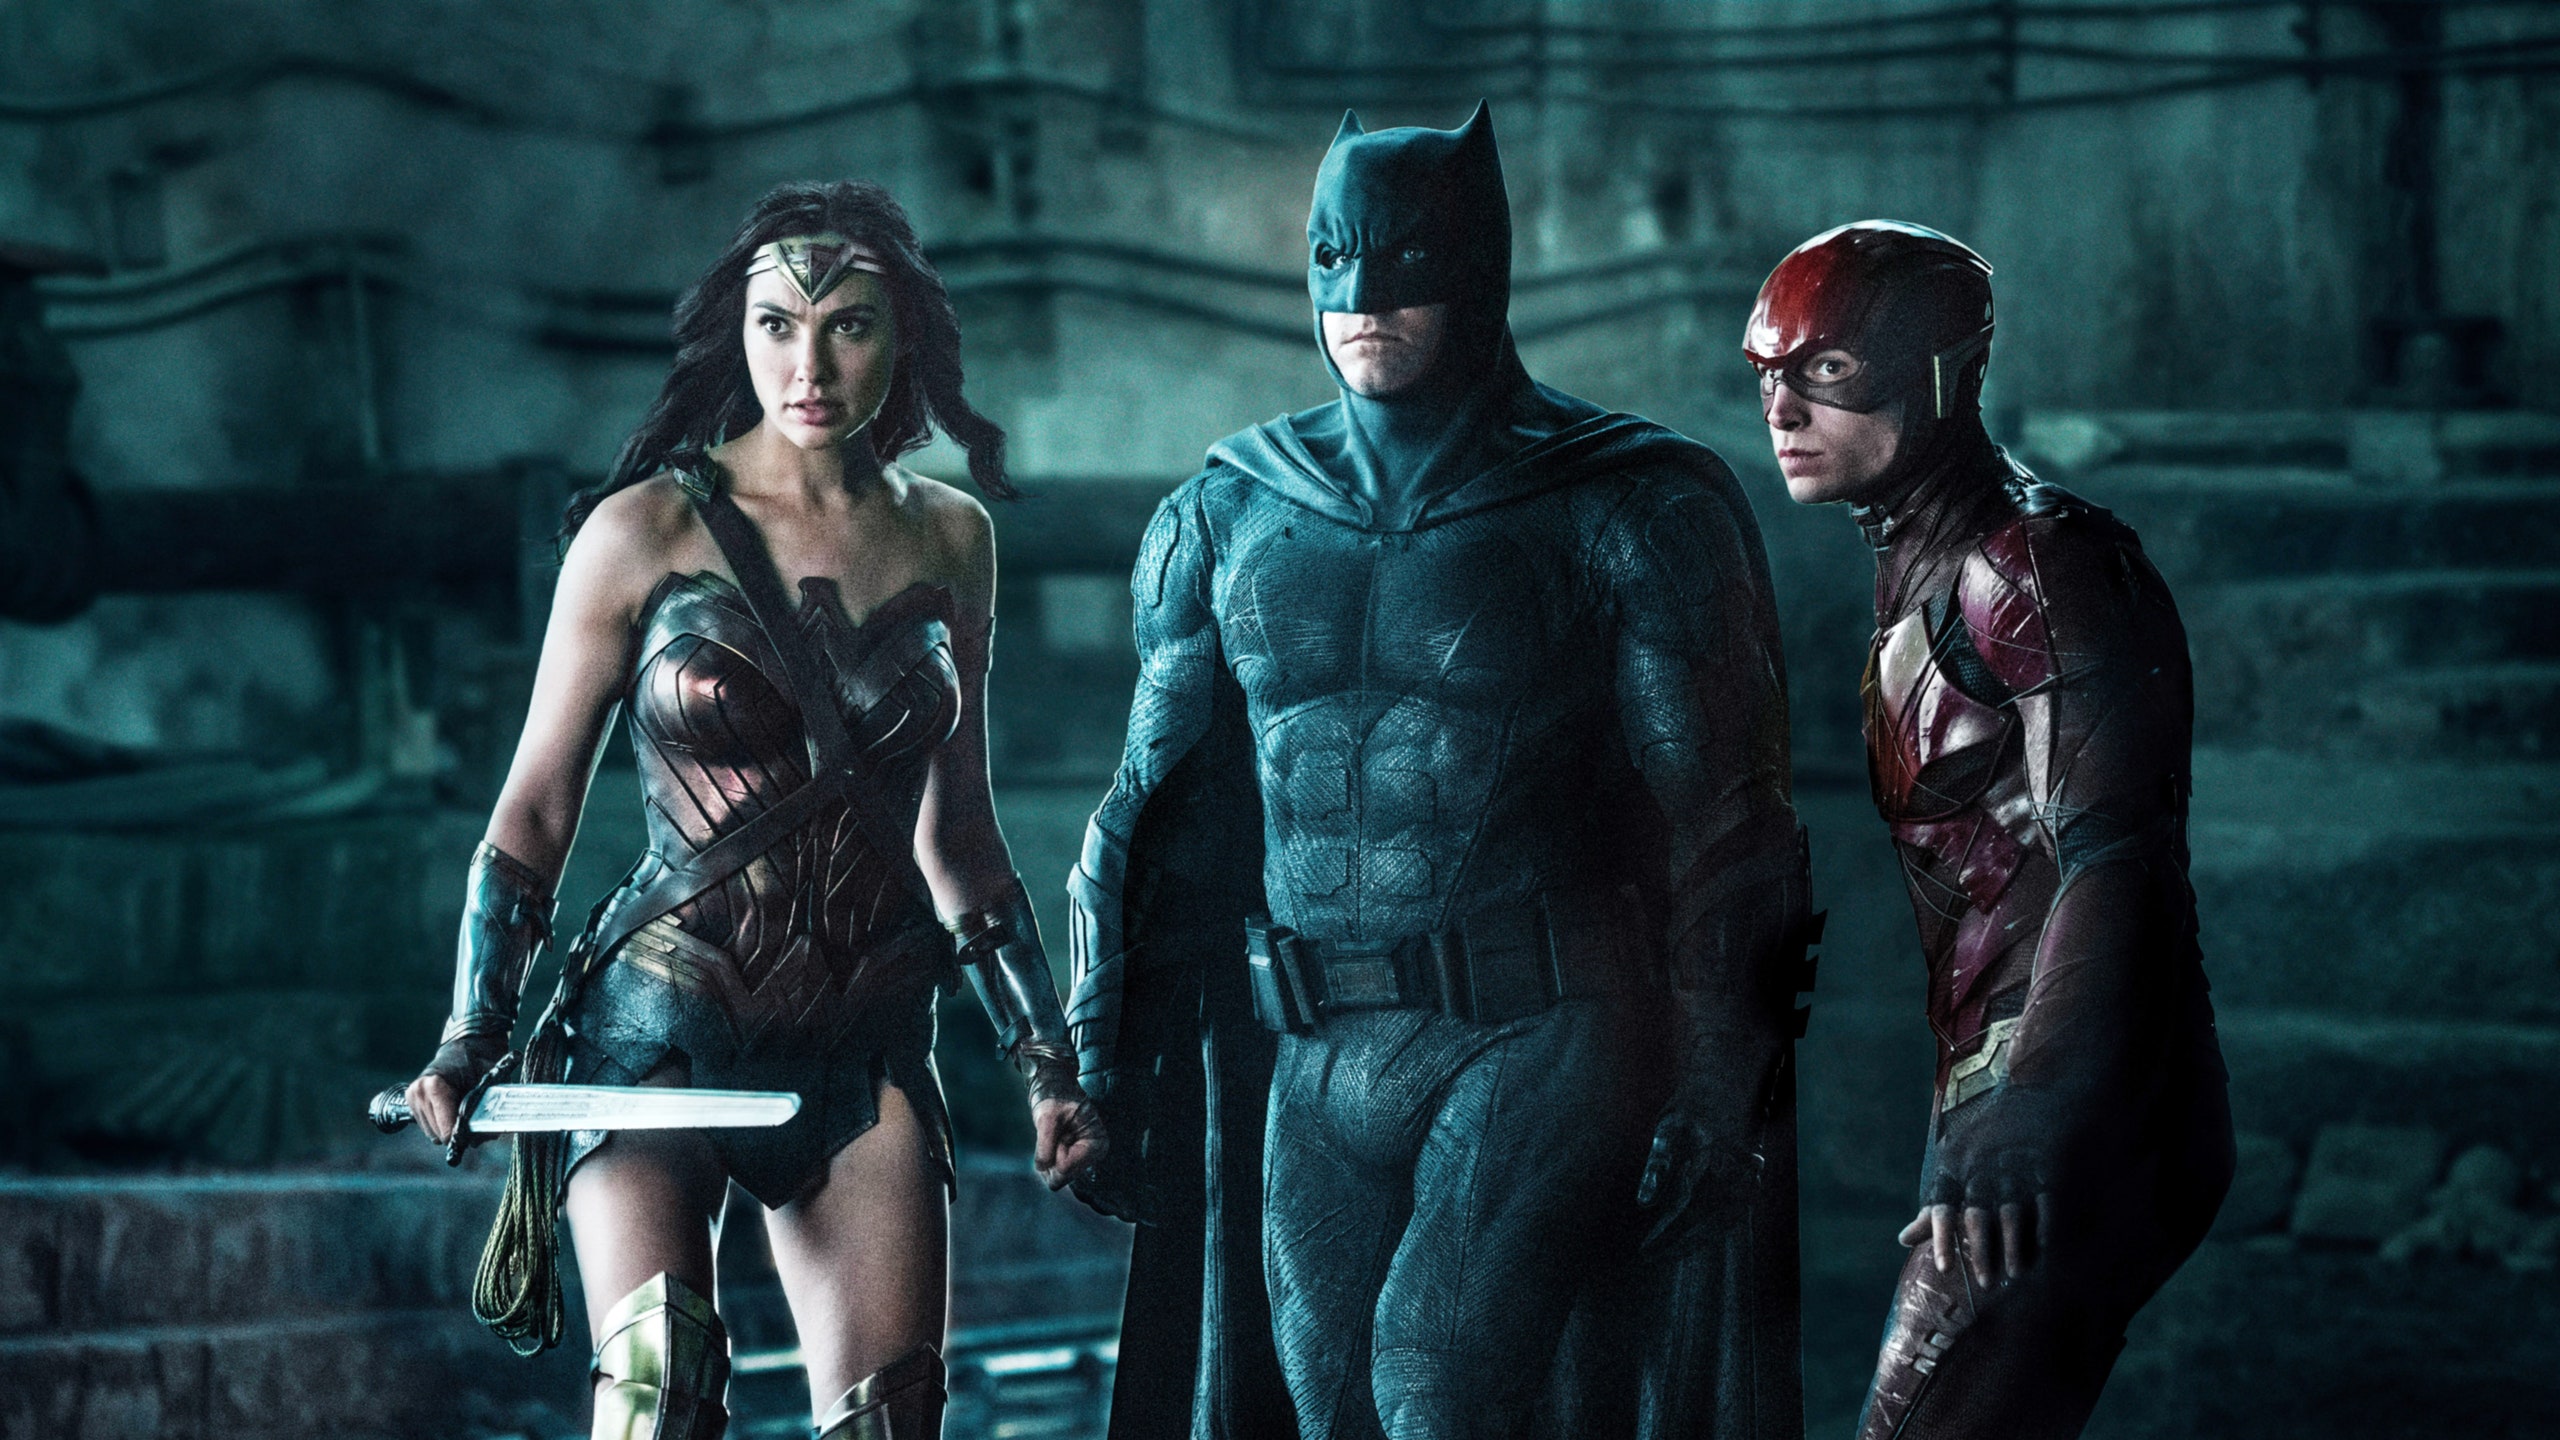 Ben Affleck As Batman Gal Gadot Wonder Woman Justice League 2017 Wallpapers